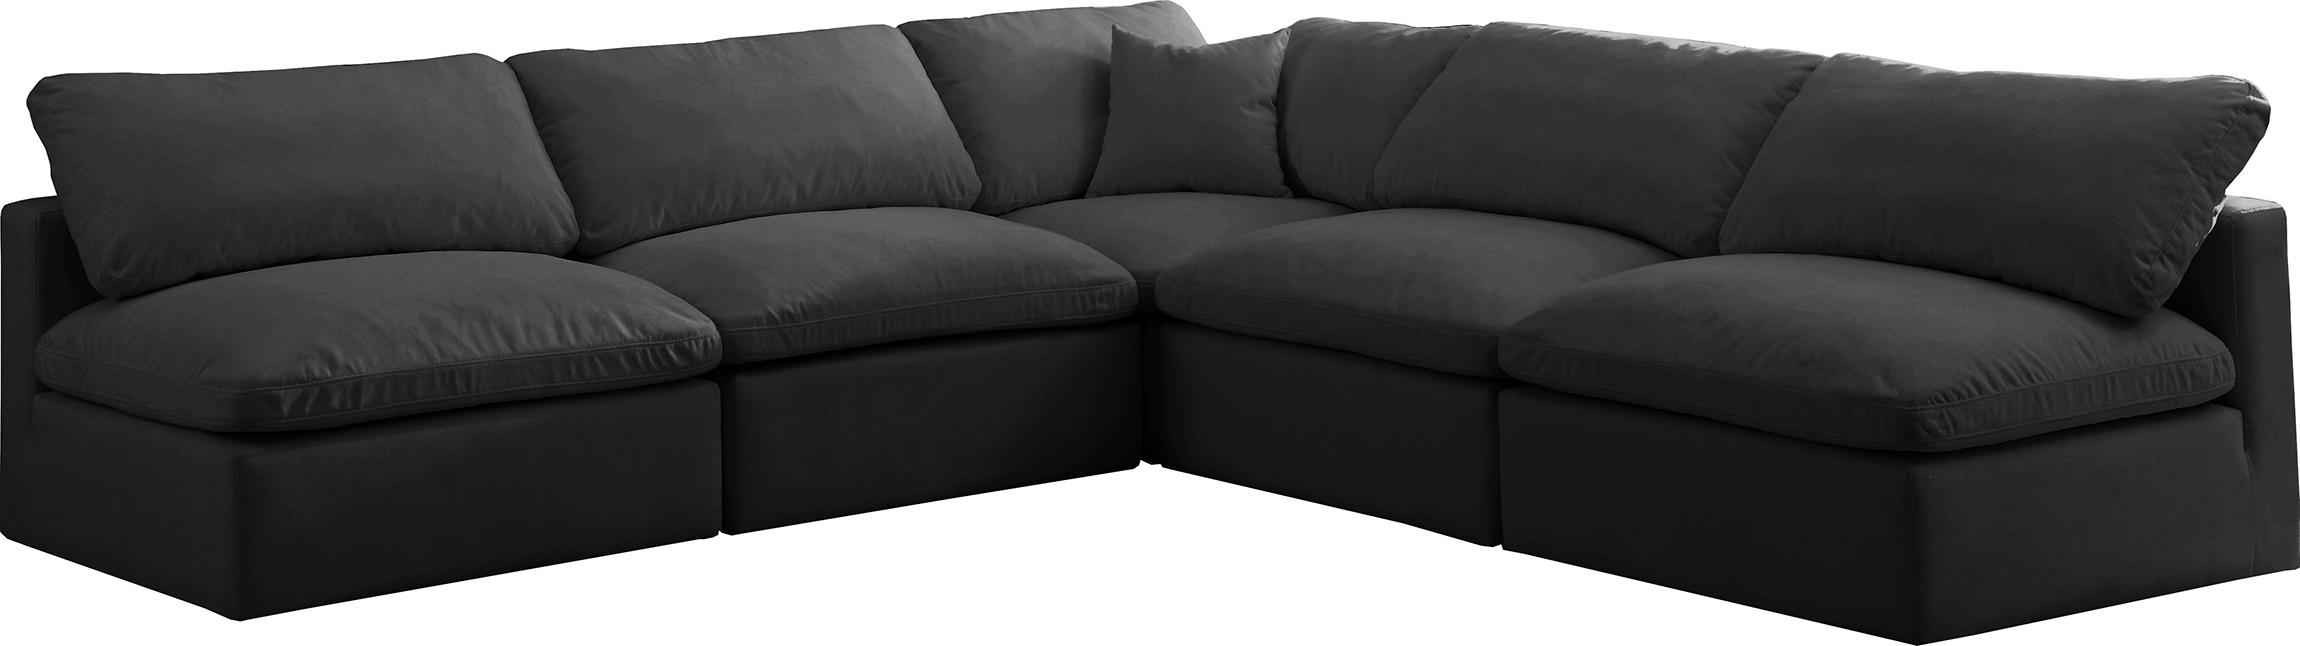 Contemporary, Modern Modular Sectional Sofa 602Black-Sec5B 602Black-Sec5B in Black Fabric